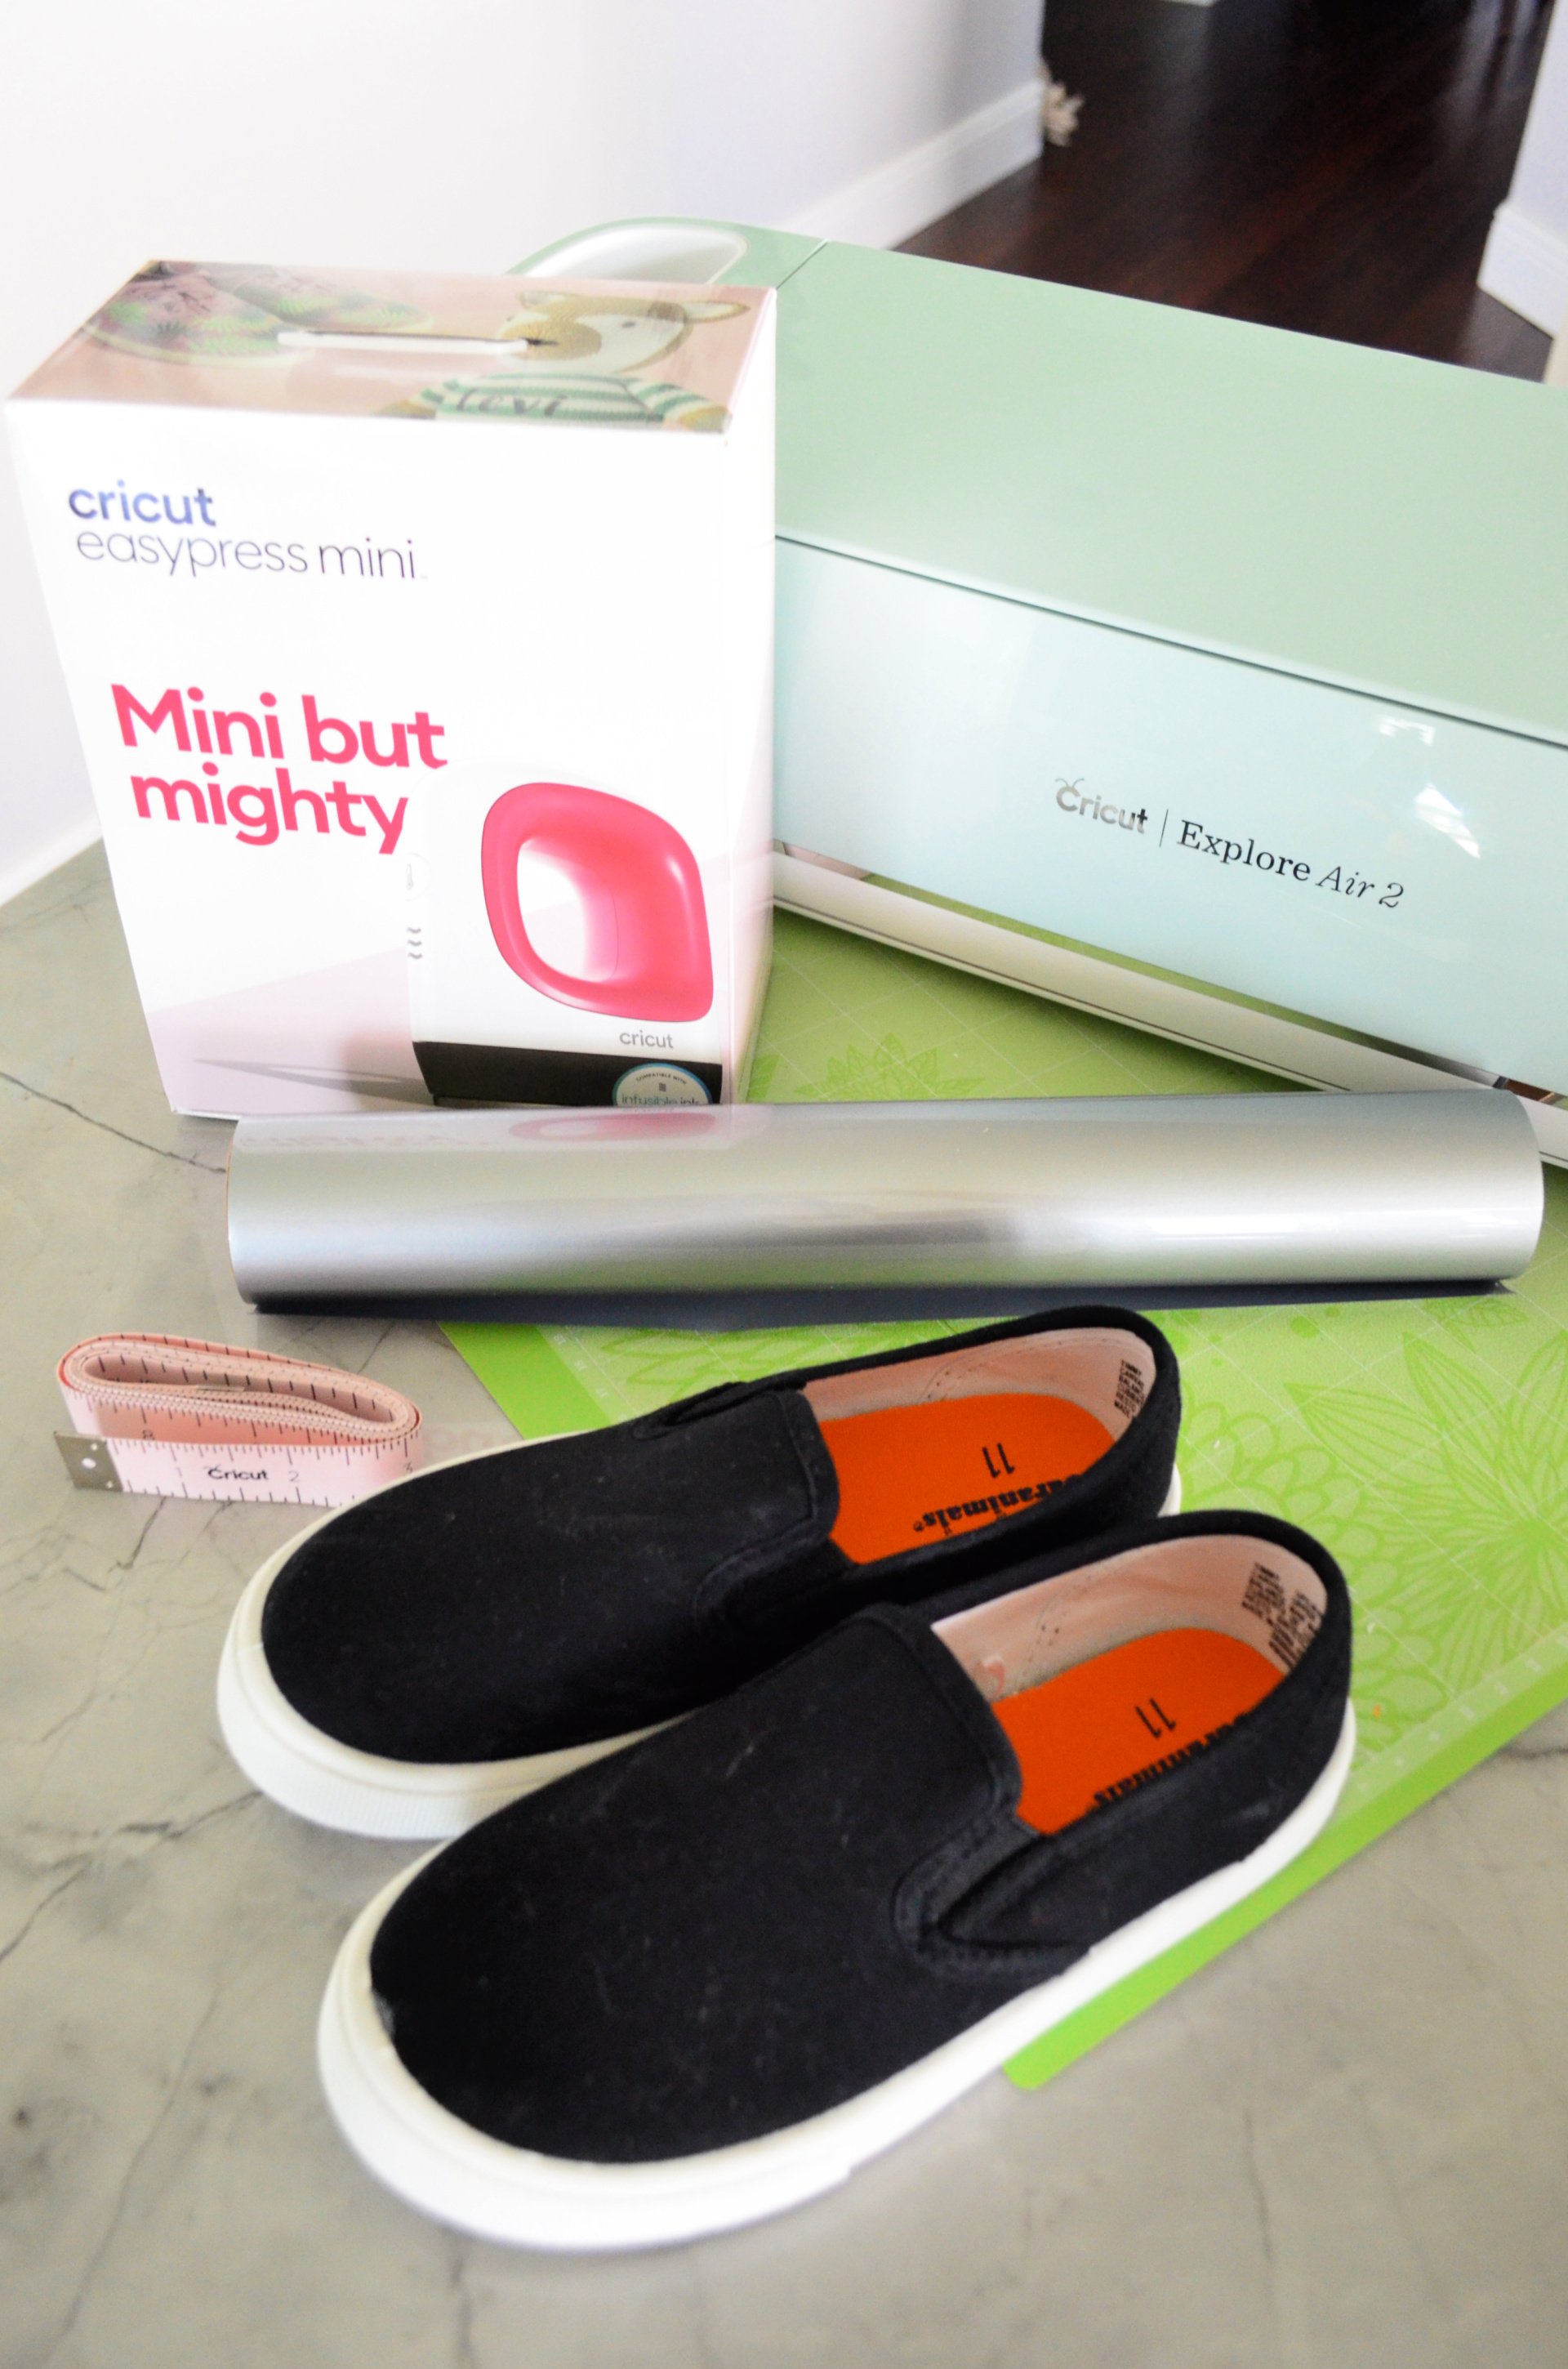 Supplies for making custom shoes using the Cricut EasyPress Mini